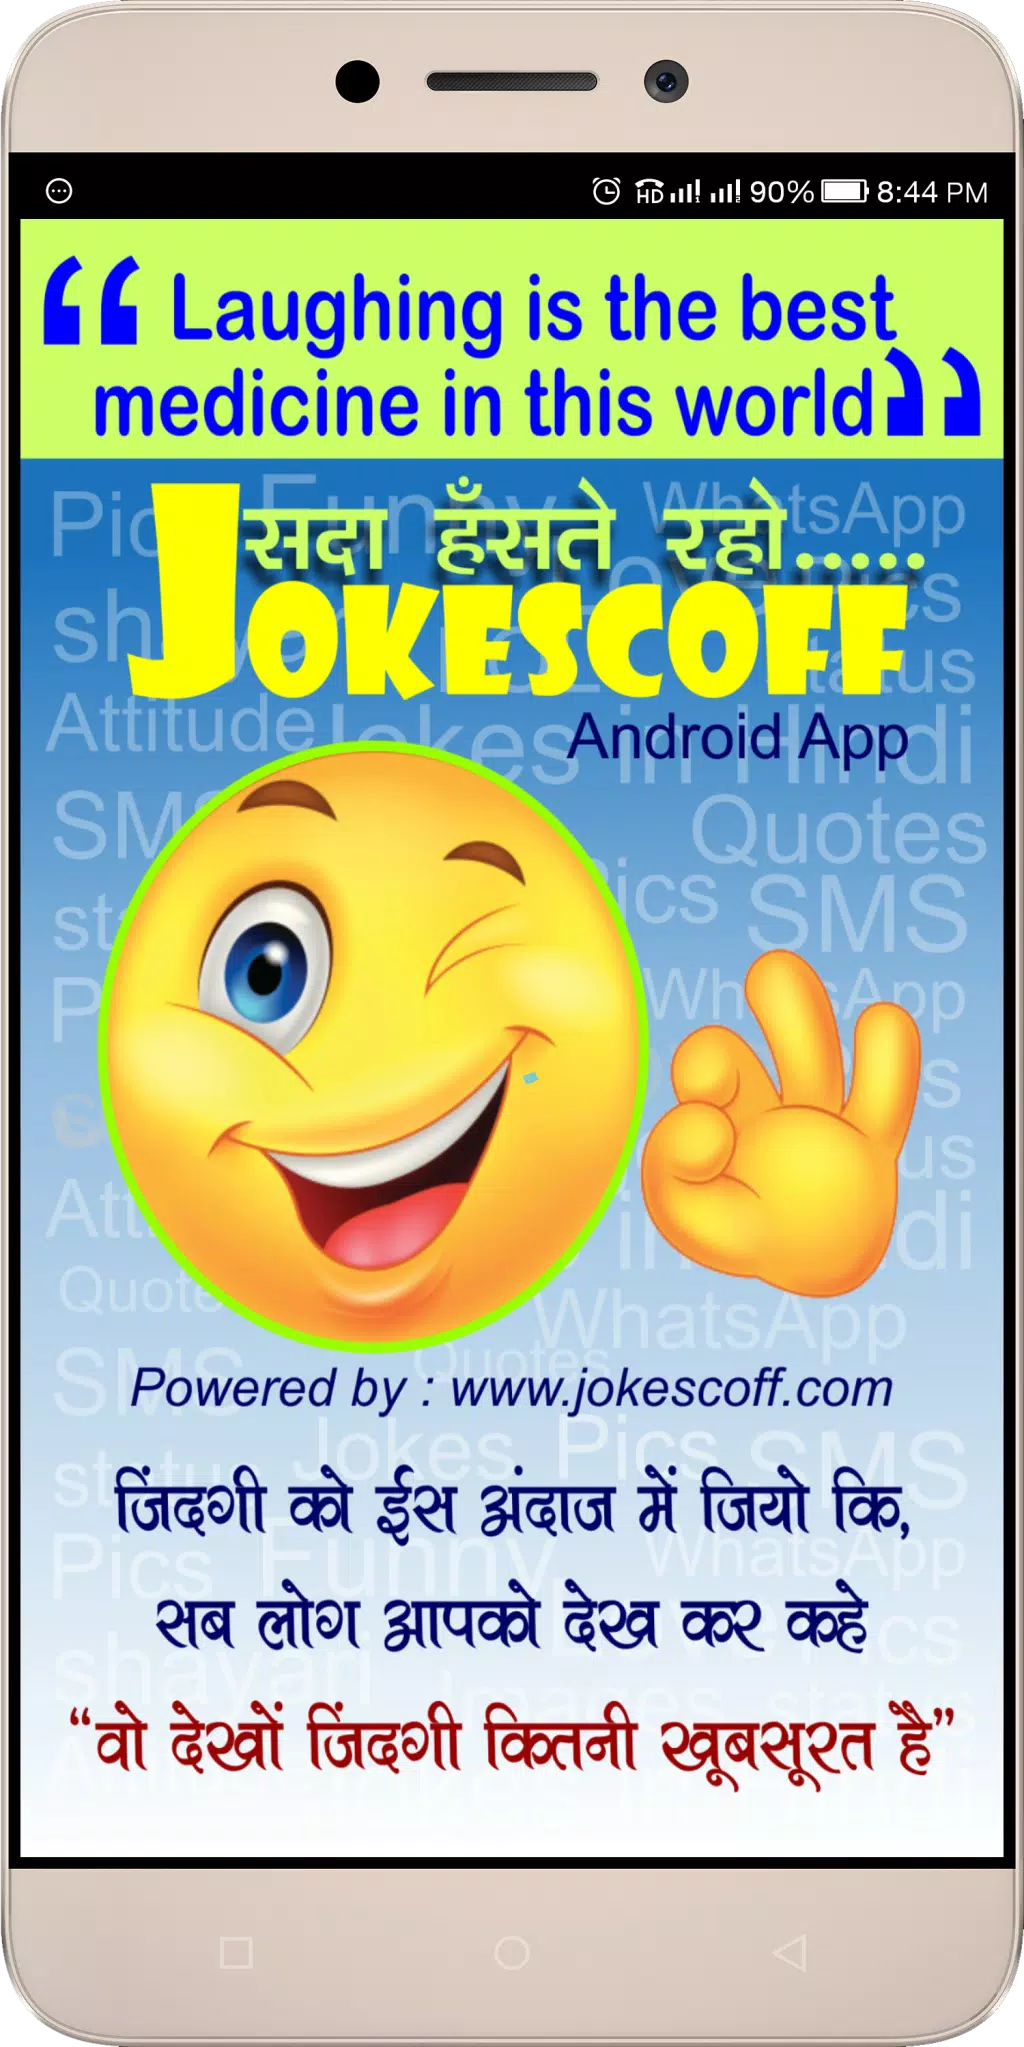 Скачать JOKESCOFF - Funny Hindi Jokes & SMS APK для Android